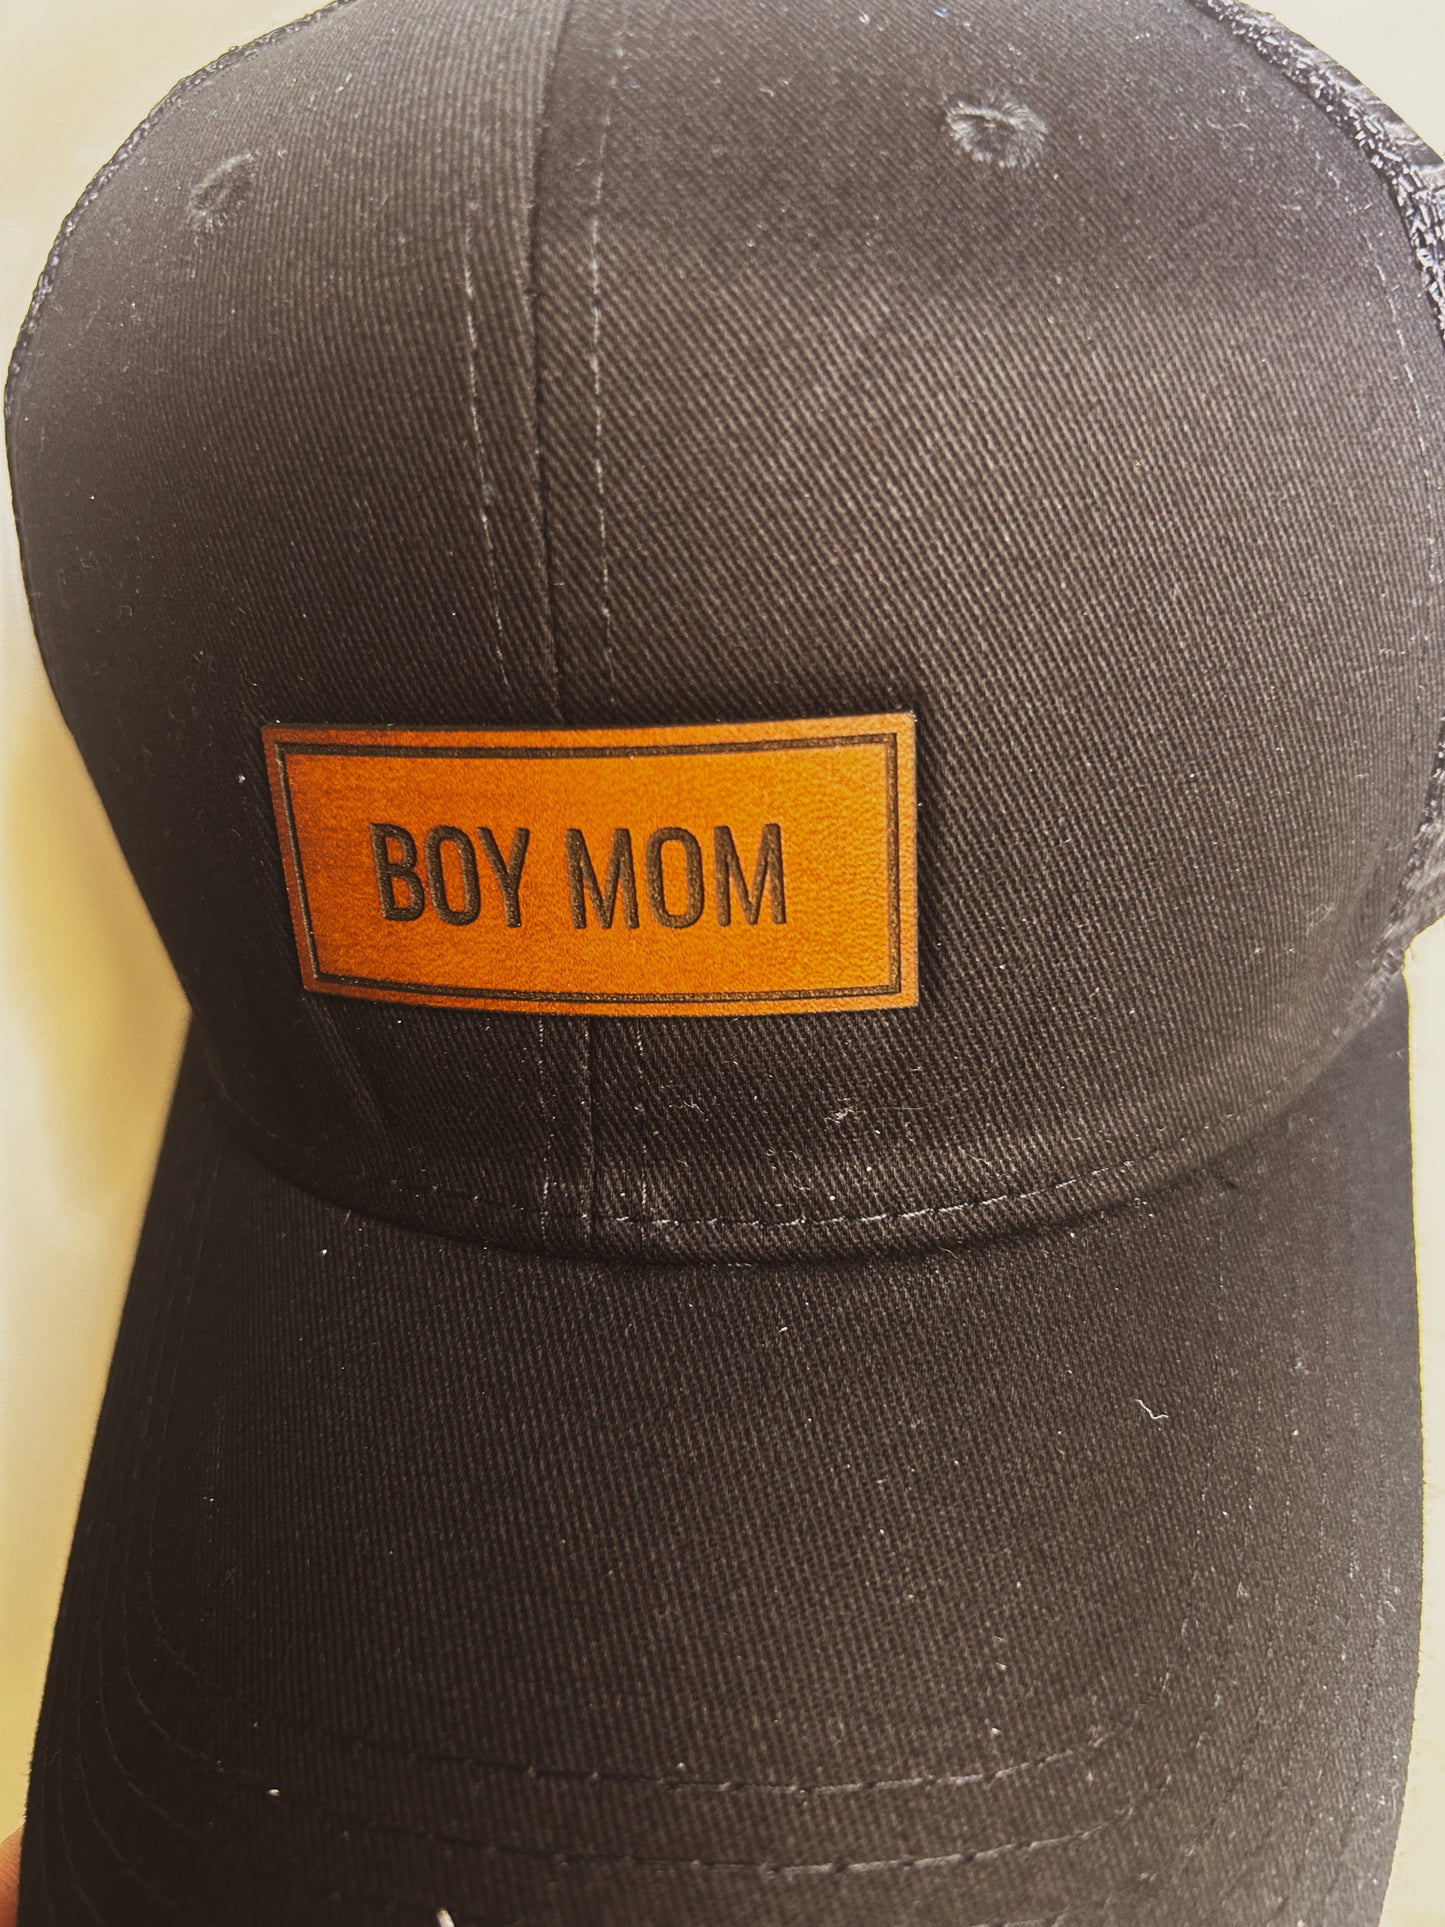 Boy Mom Leather Patch on Black Baseball Hat